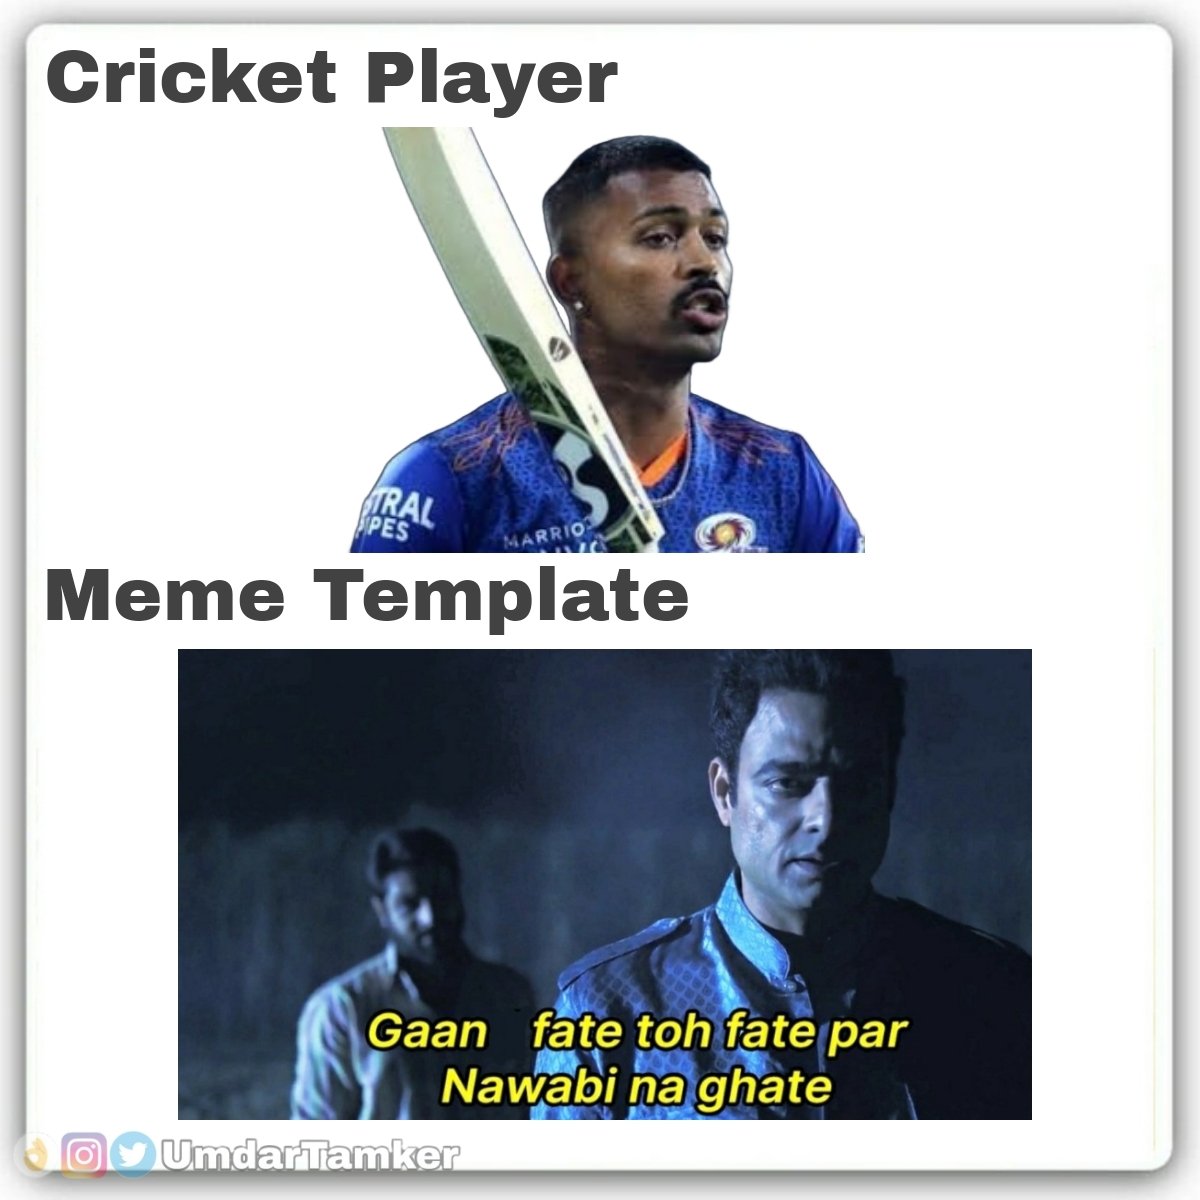 Cricket Players & their fav meme template : IPL edition. A thread 🧵 

1. Hardik Pandya